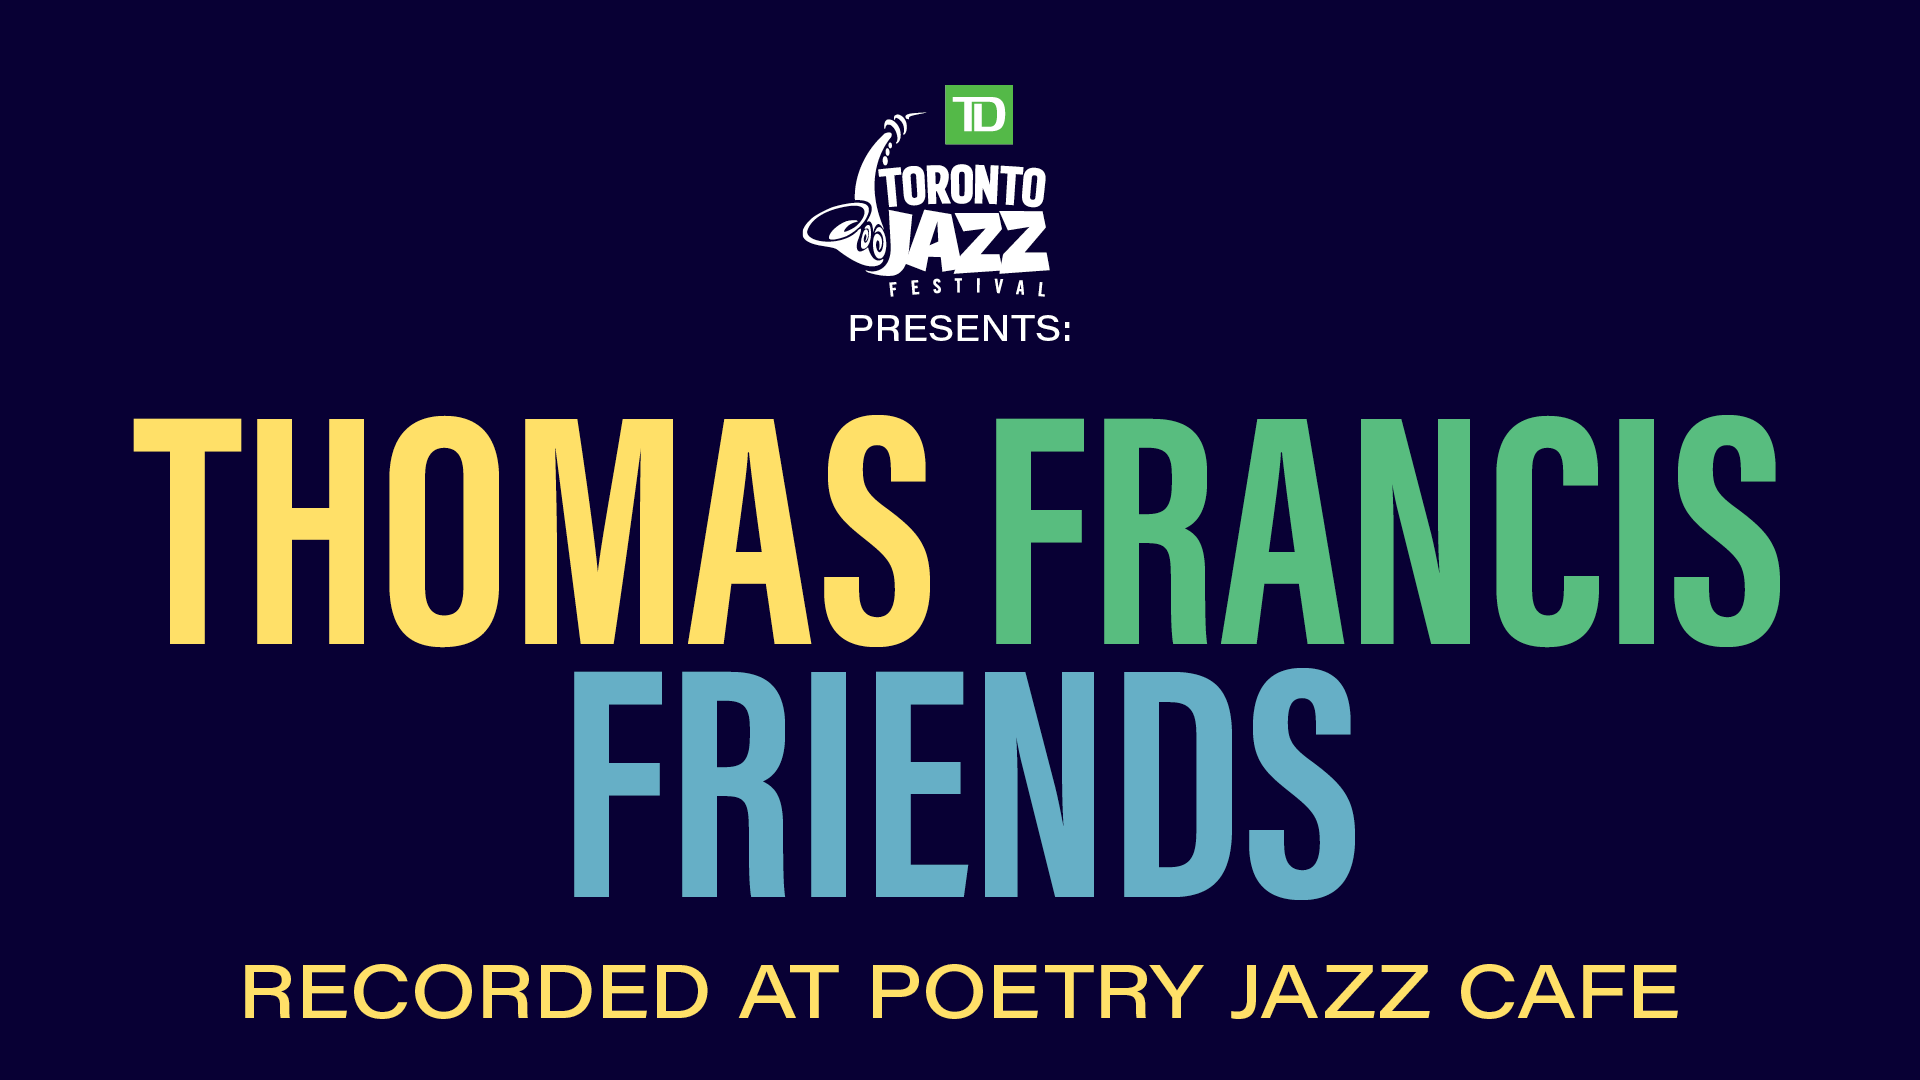 TD Toronto Jazz Festival presents… City of Culture: Thomas Francis Friends